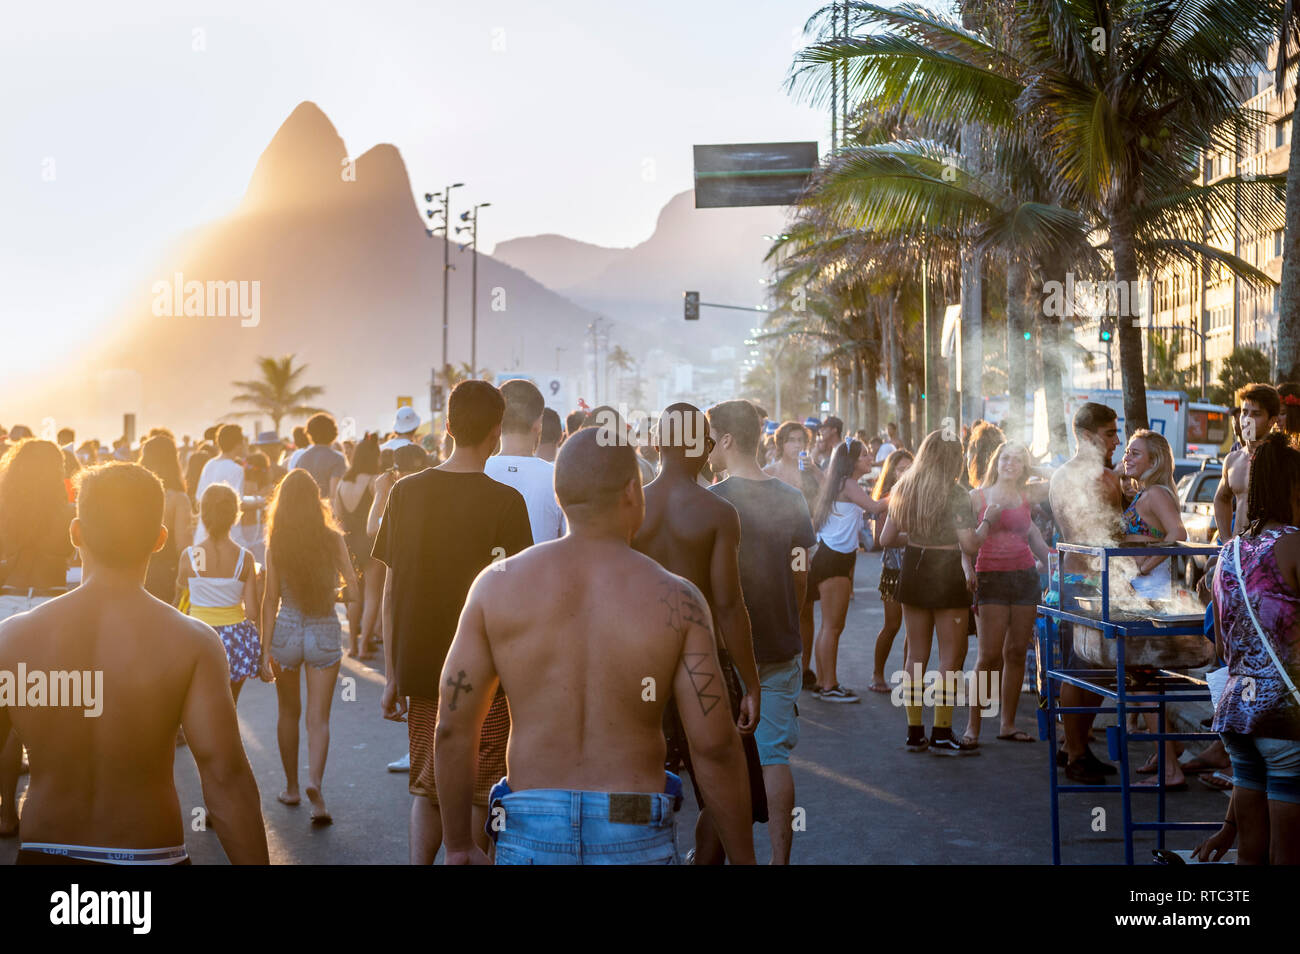 RIO DE JANEIRO - FEBRUARY 11, 2017: Crowds of Brazilians celebrate Carnival at a sunset bloco street party on the Ipanema beachfront. Stock Photo